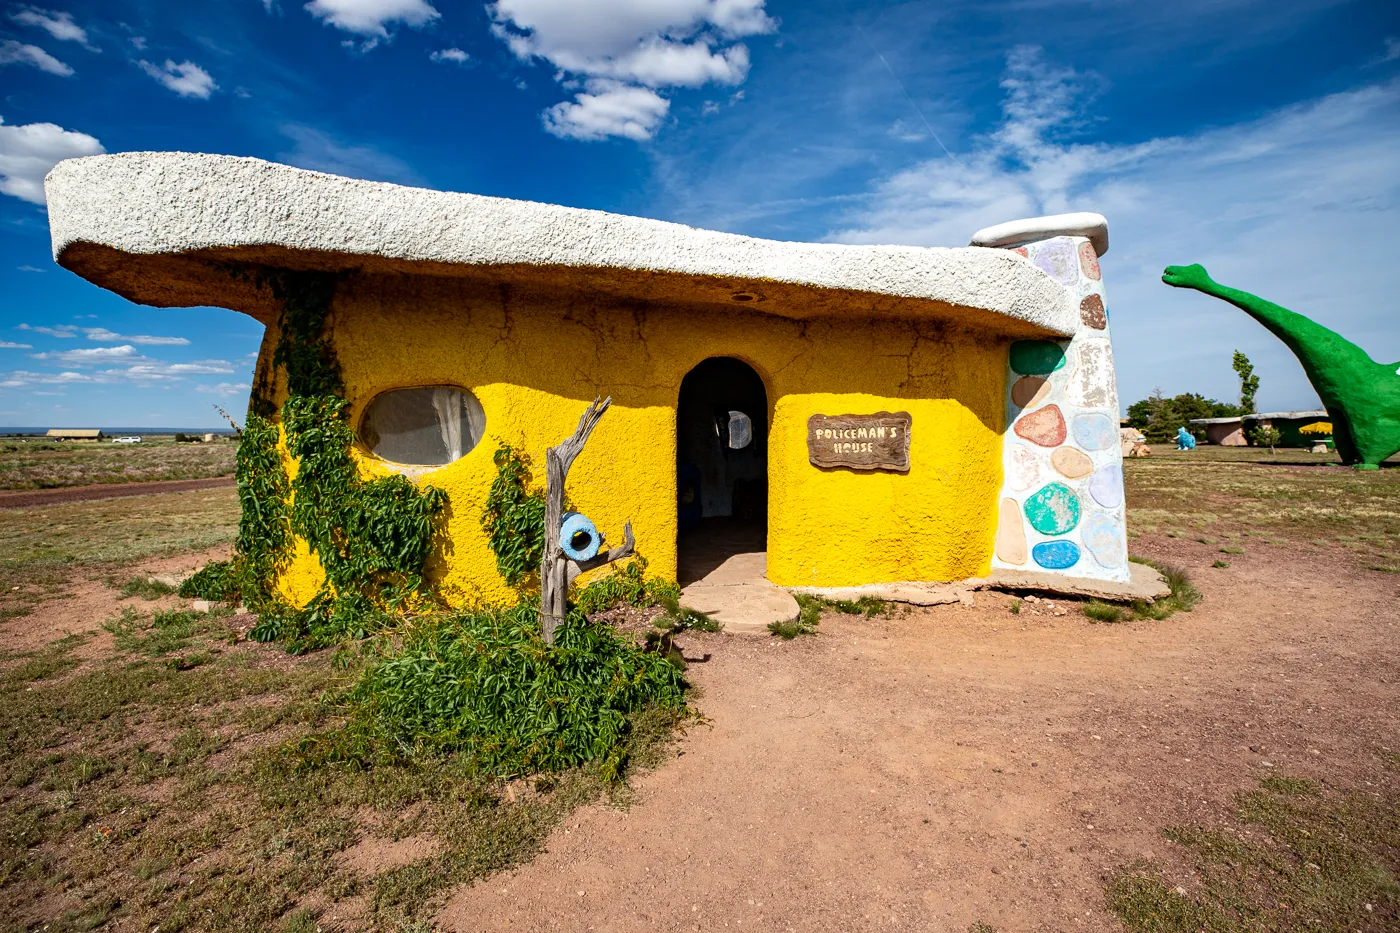 Policeman's House at Flintstones Bedrock City in Williams, Arizona